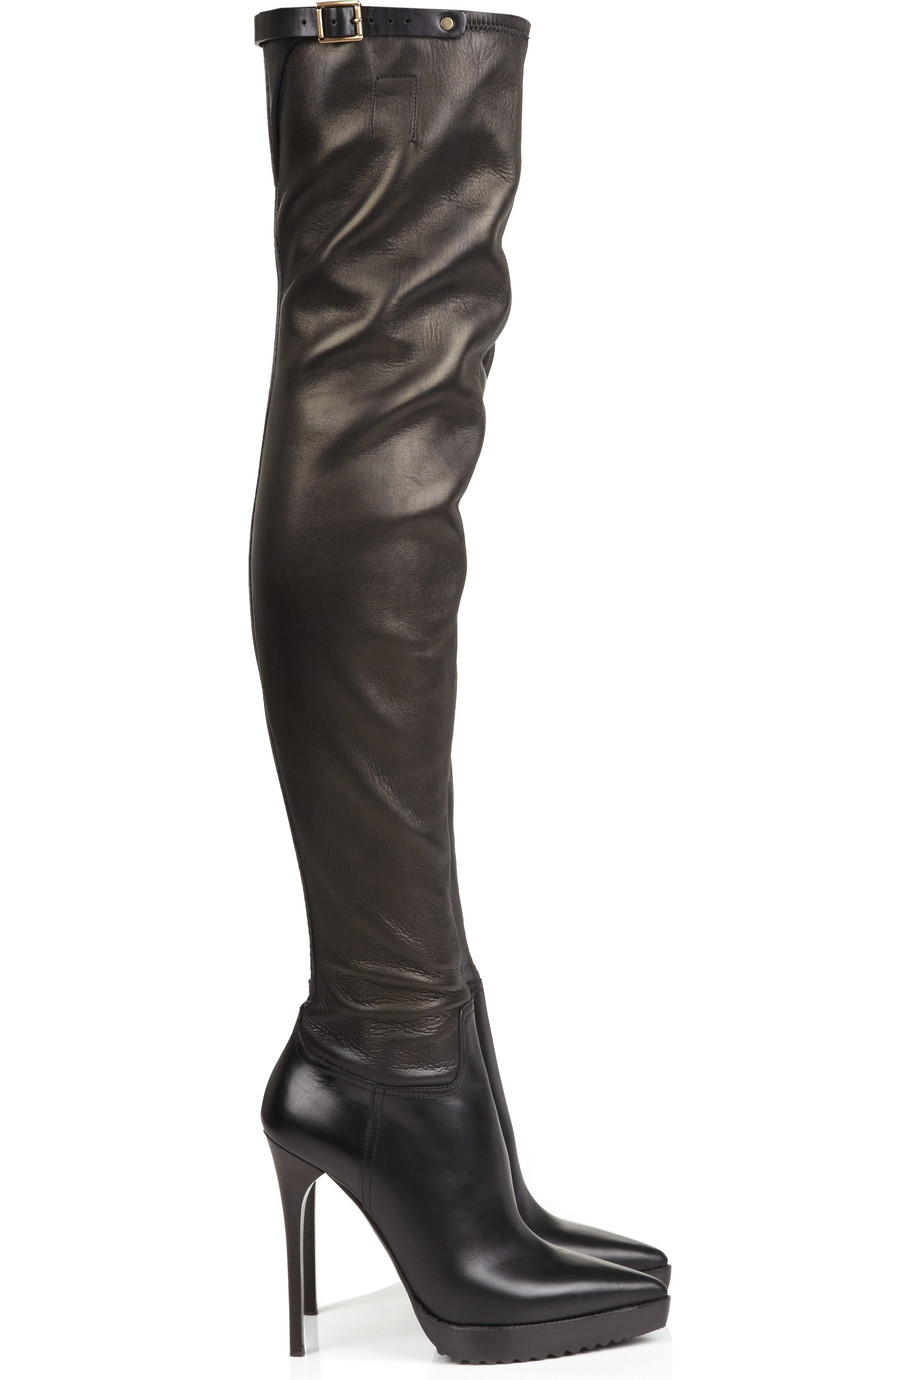 Burberry Prorsum Leather Thigh-high 